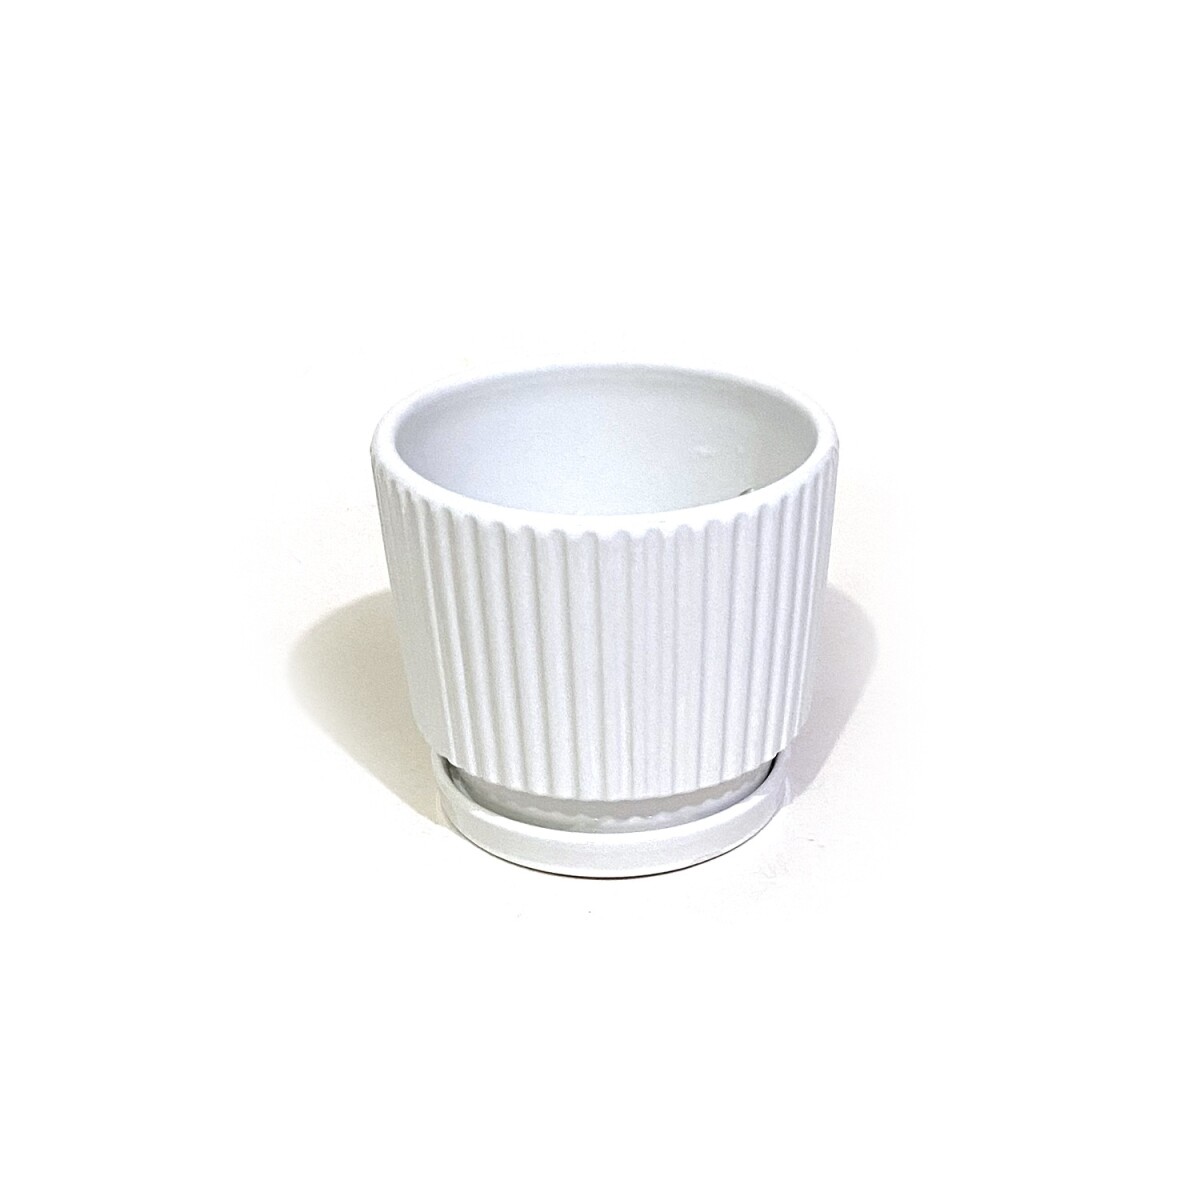 Maceta Ceramica Blanca Con Rayas 17,5x 15,8 